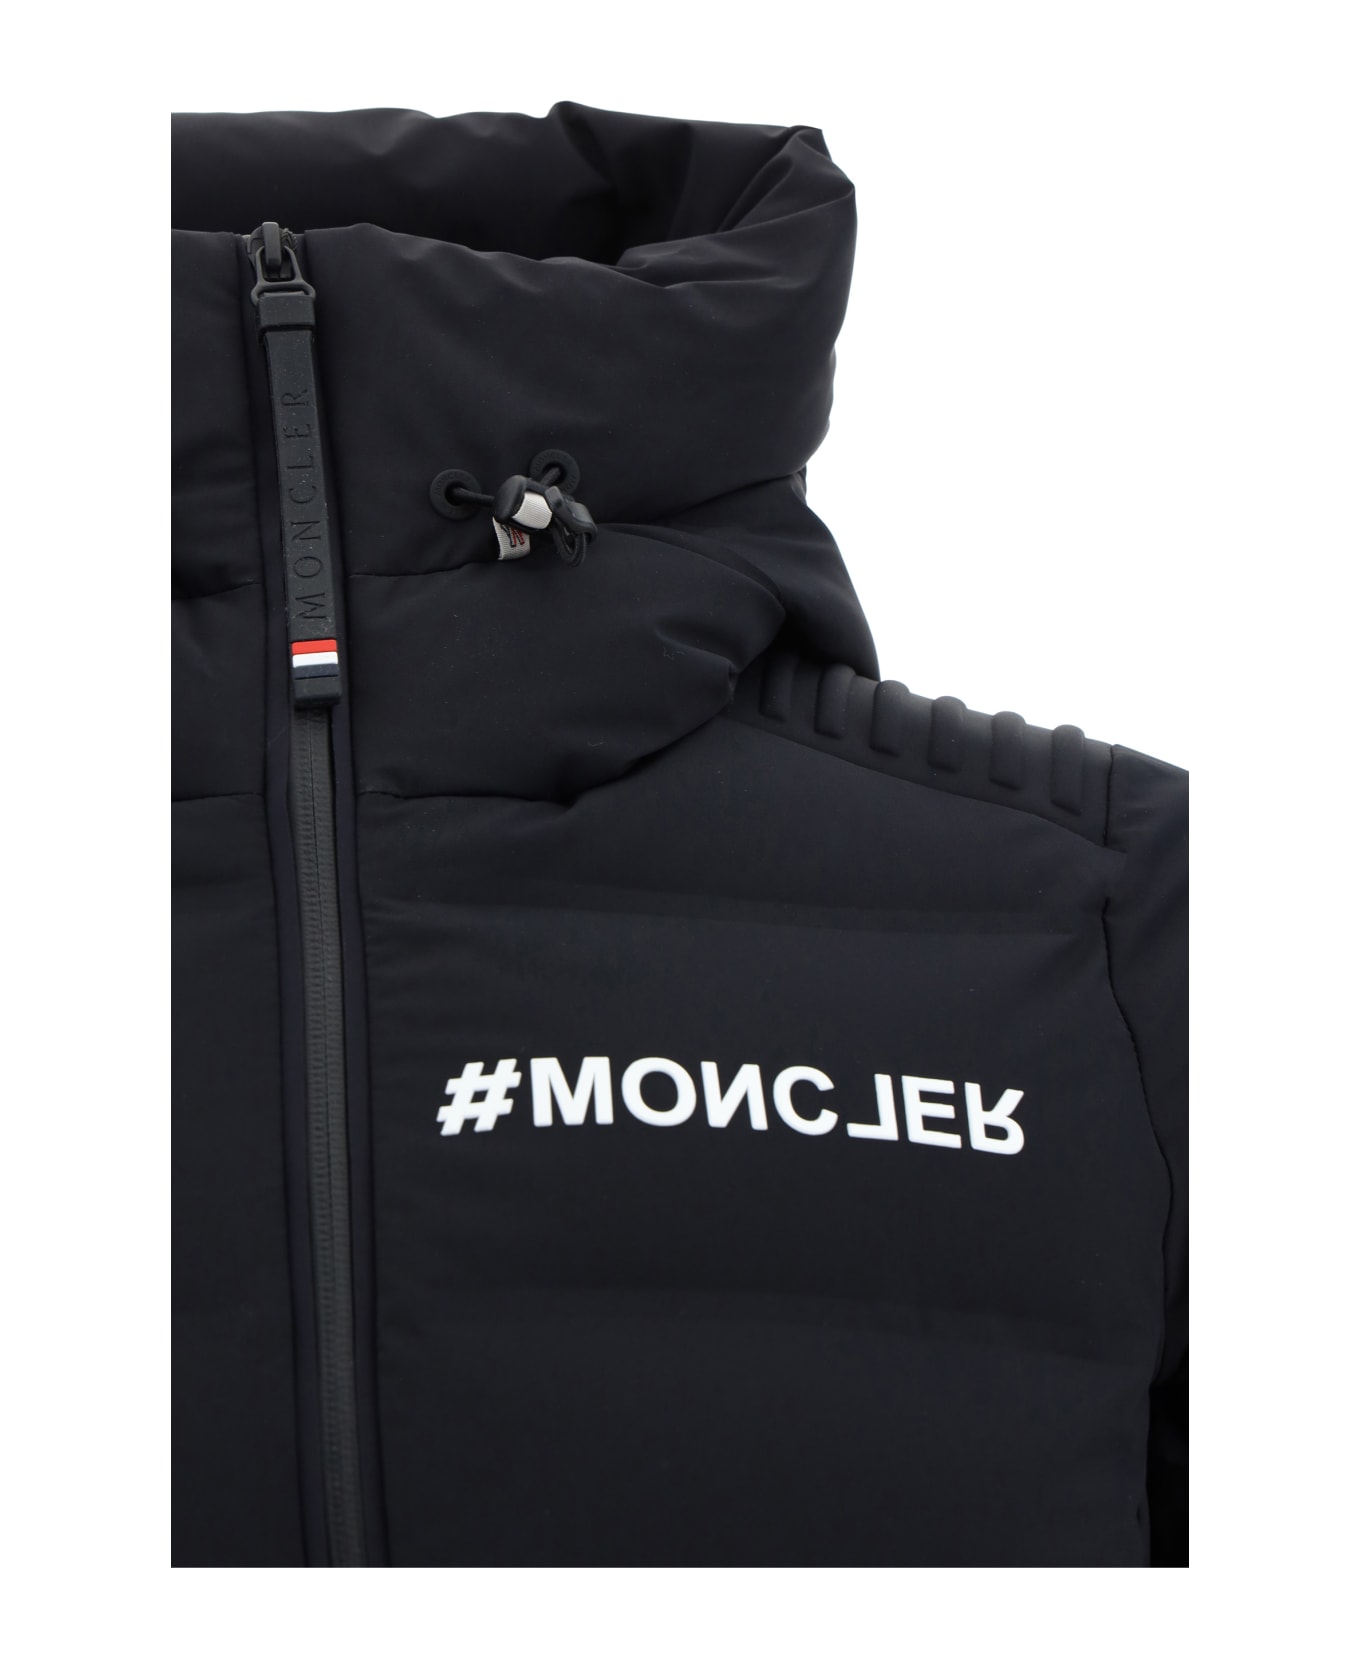 Moncler Grenoble Black Suisses Down Jacket - Black